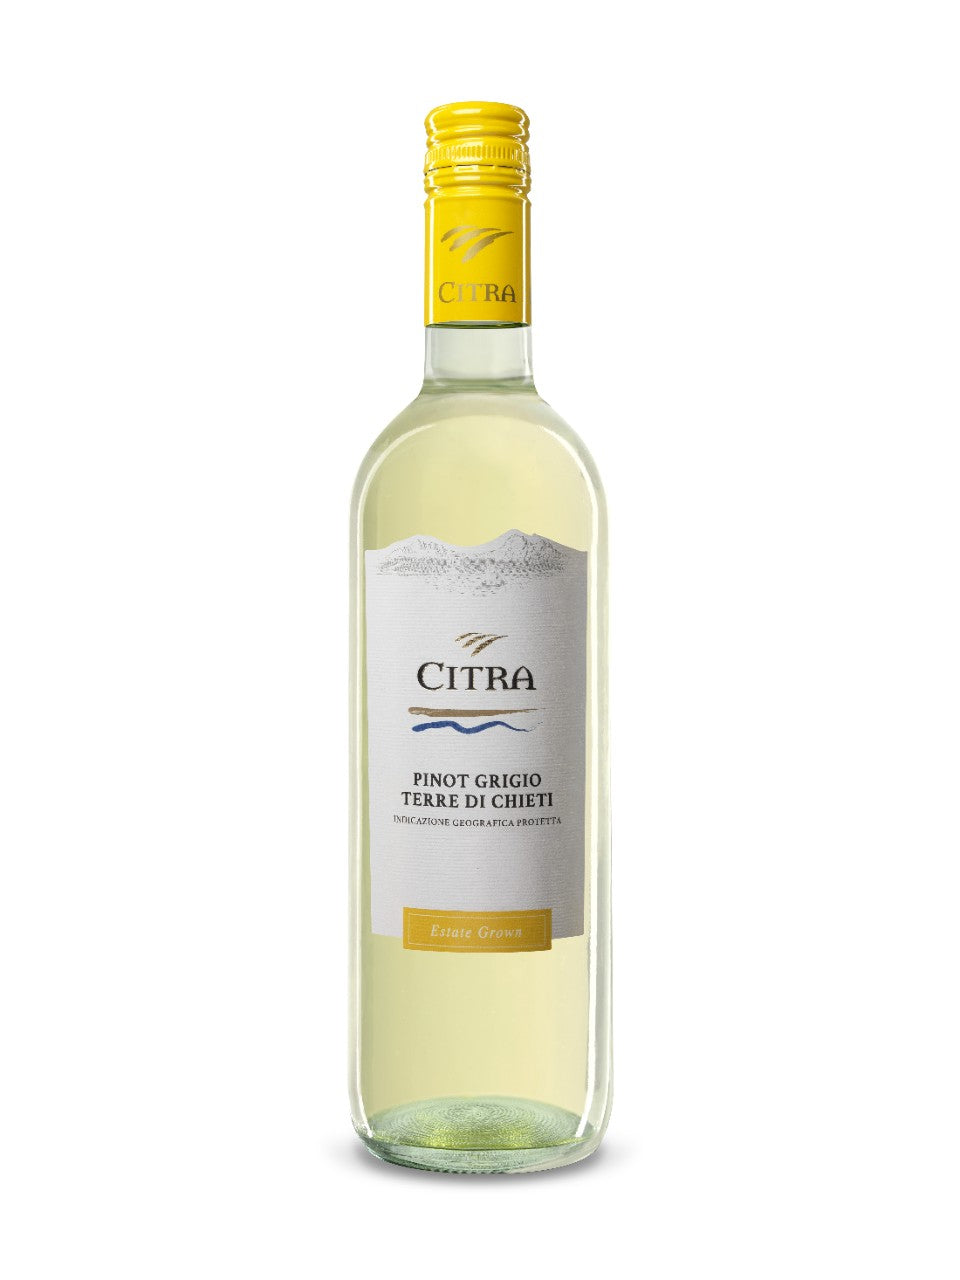 Citra Pinot Grigio Terre Di Chieti IGP Pinot Grigio 750 mL bottle